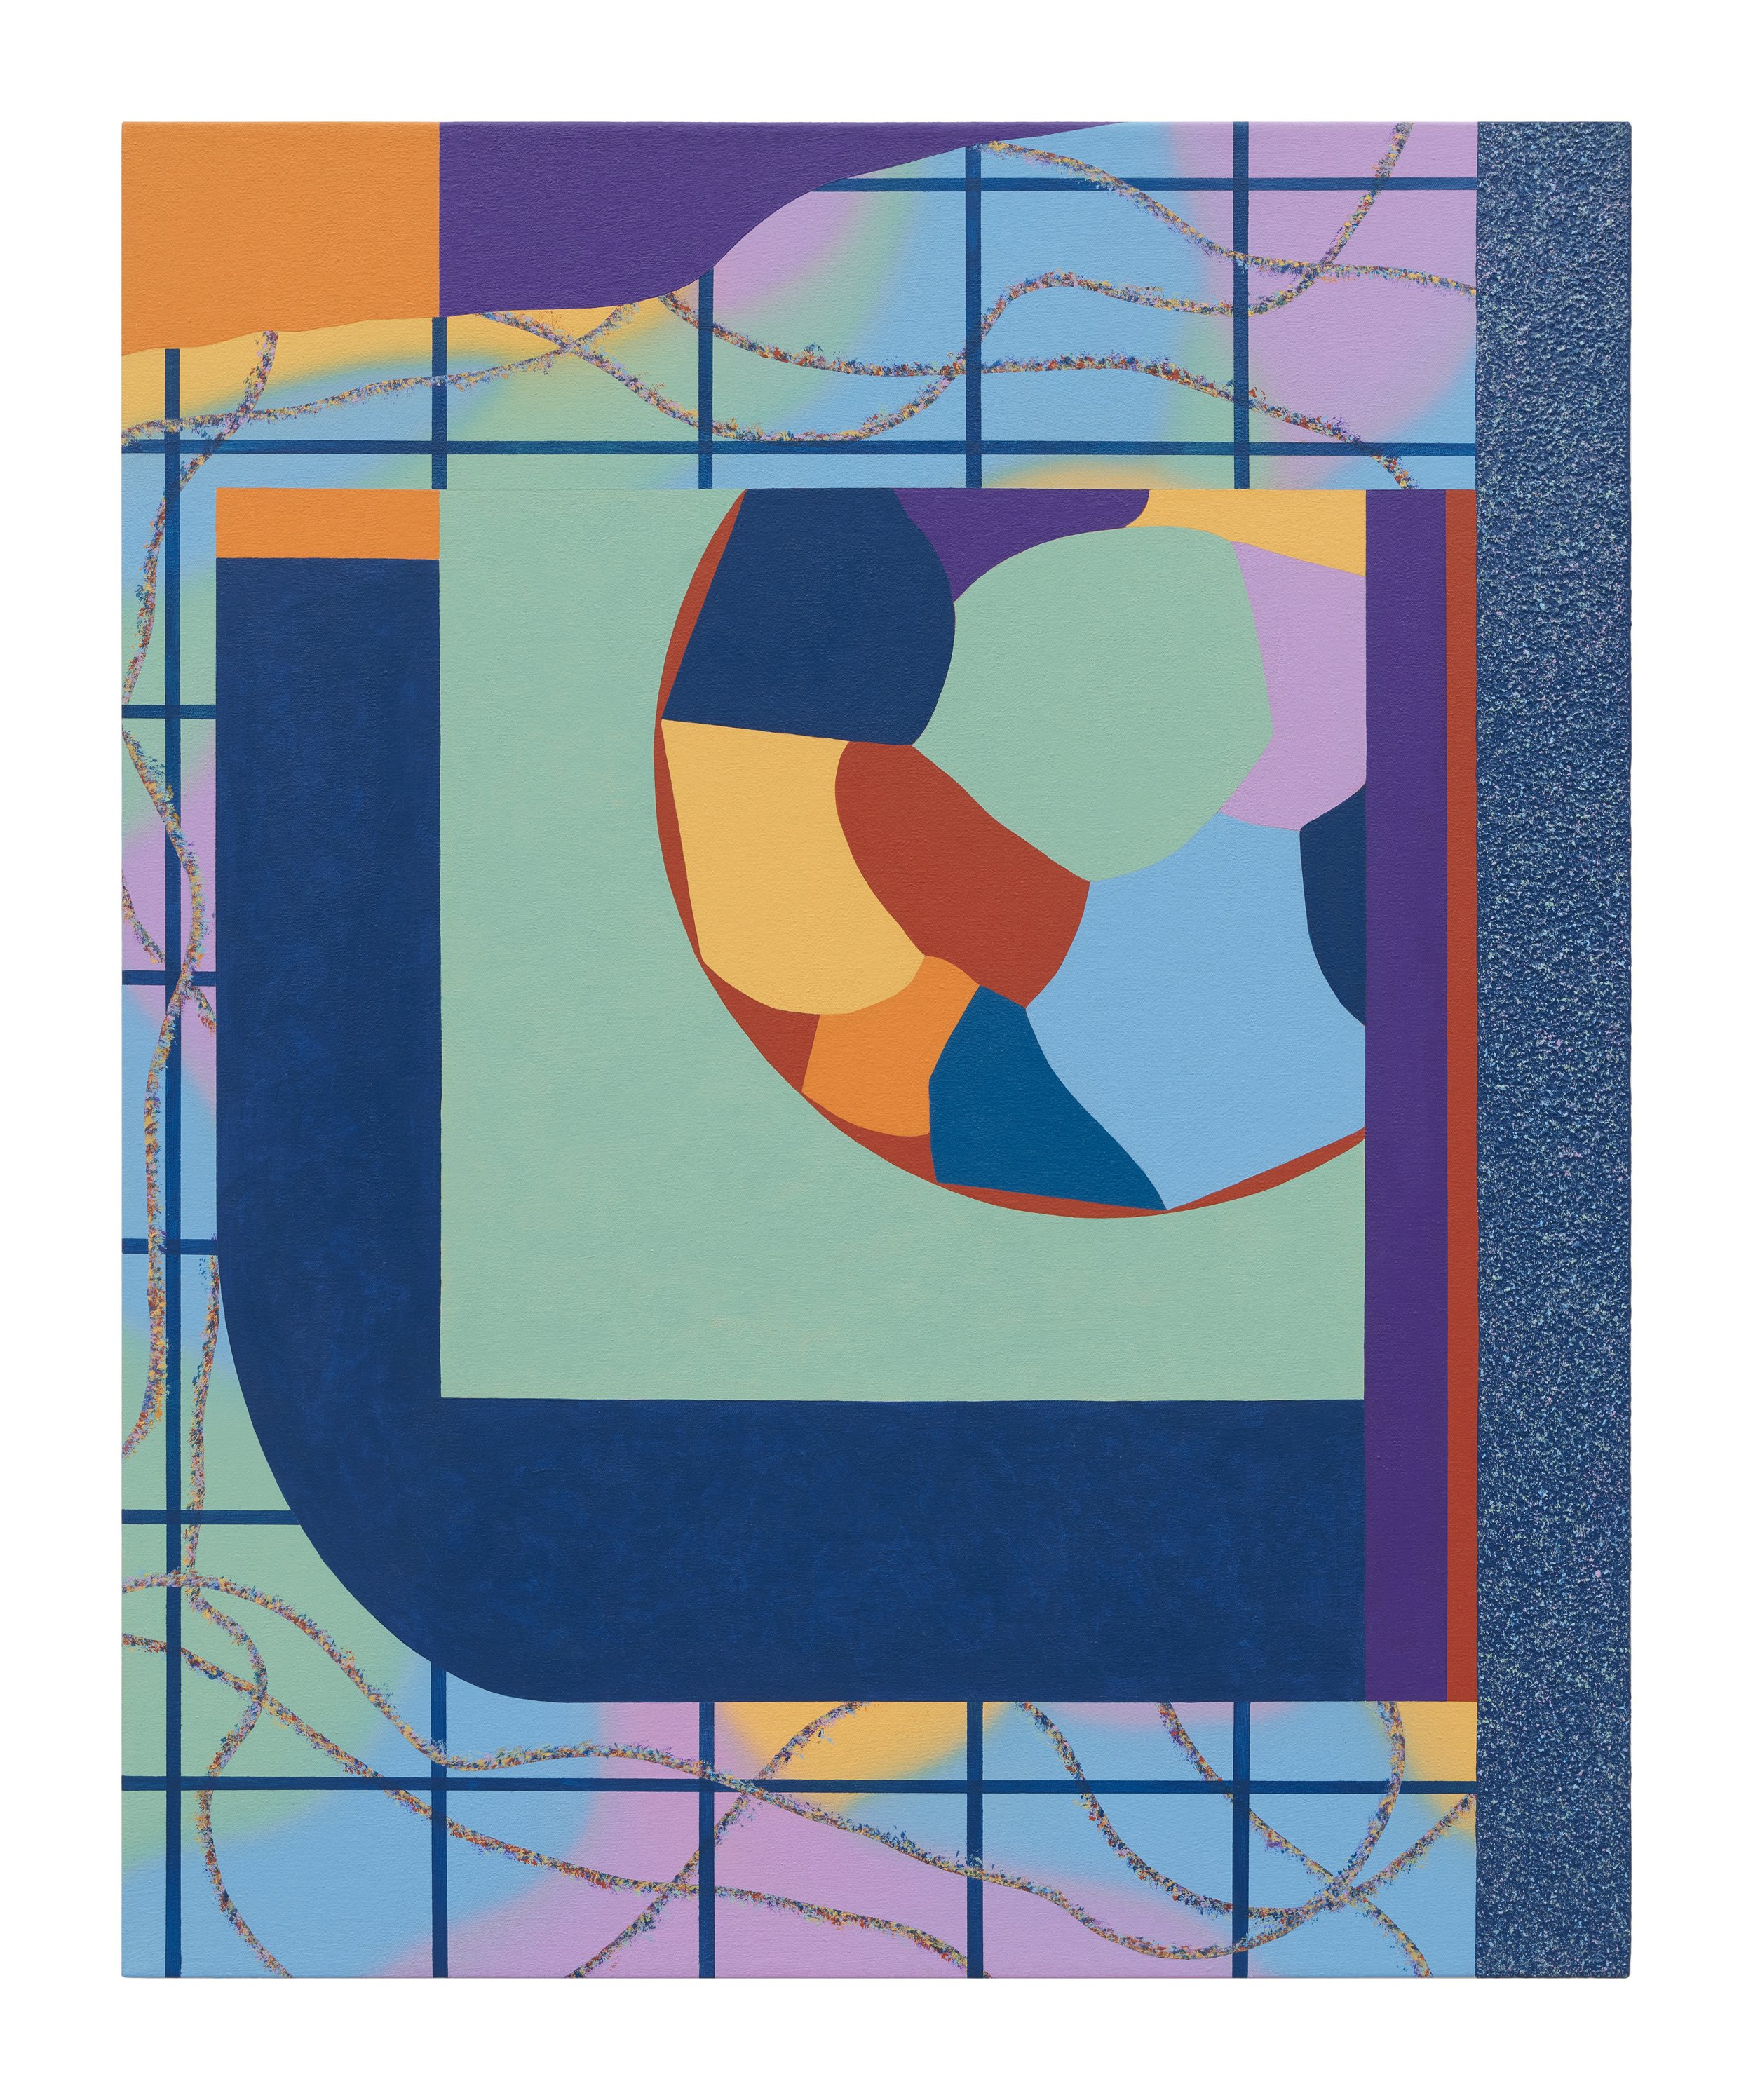   bläuliches Grün/Mosaikform (Bluish Green/Mosaic Shape) , 2021 Acrylic on canvas 31 1/2 x 25 x 1 1/4 inches 